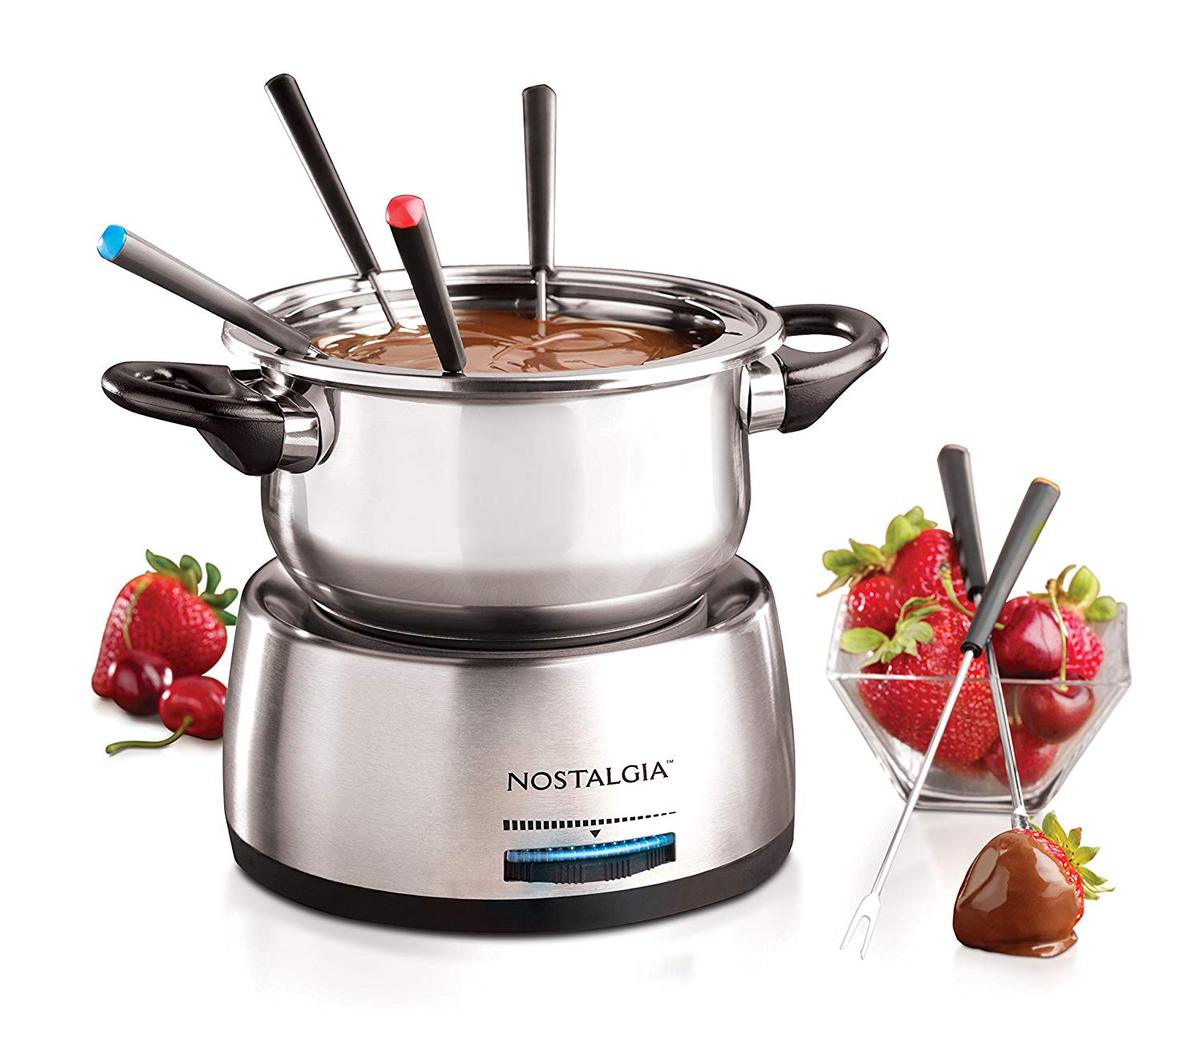 Electric fondue kit from Amazon.